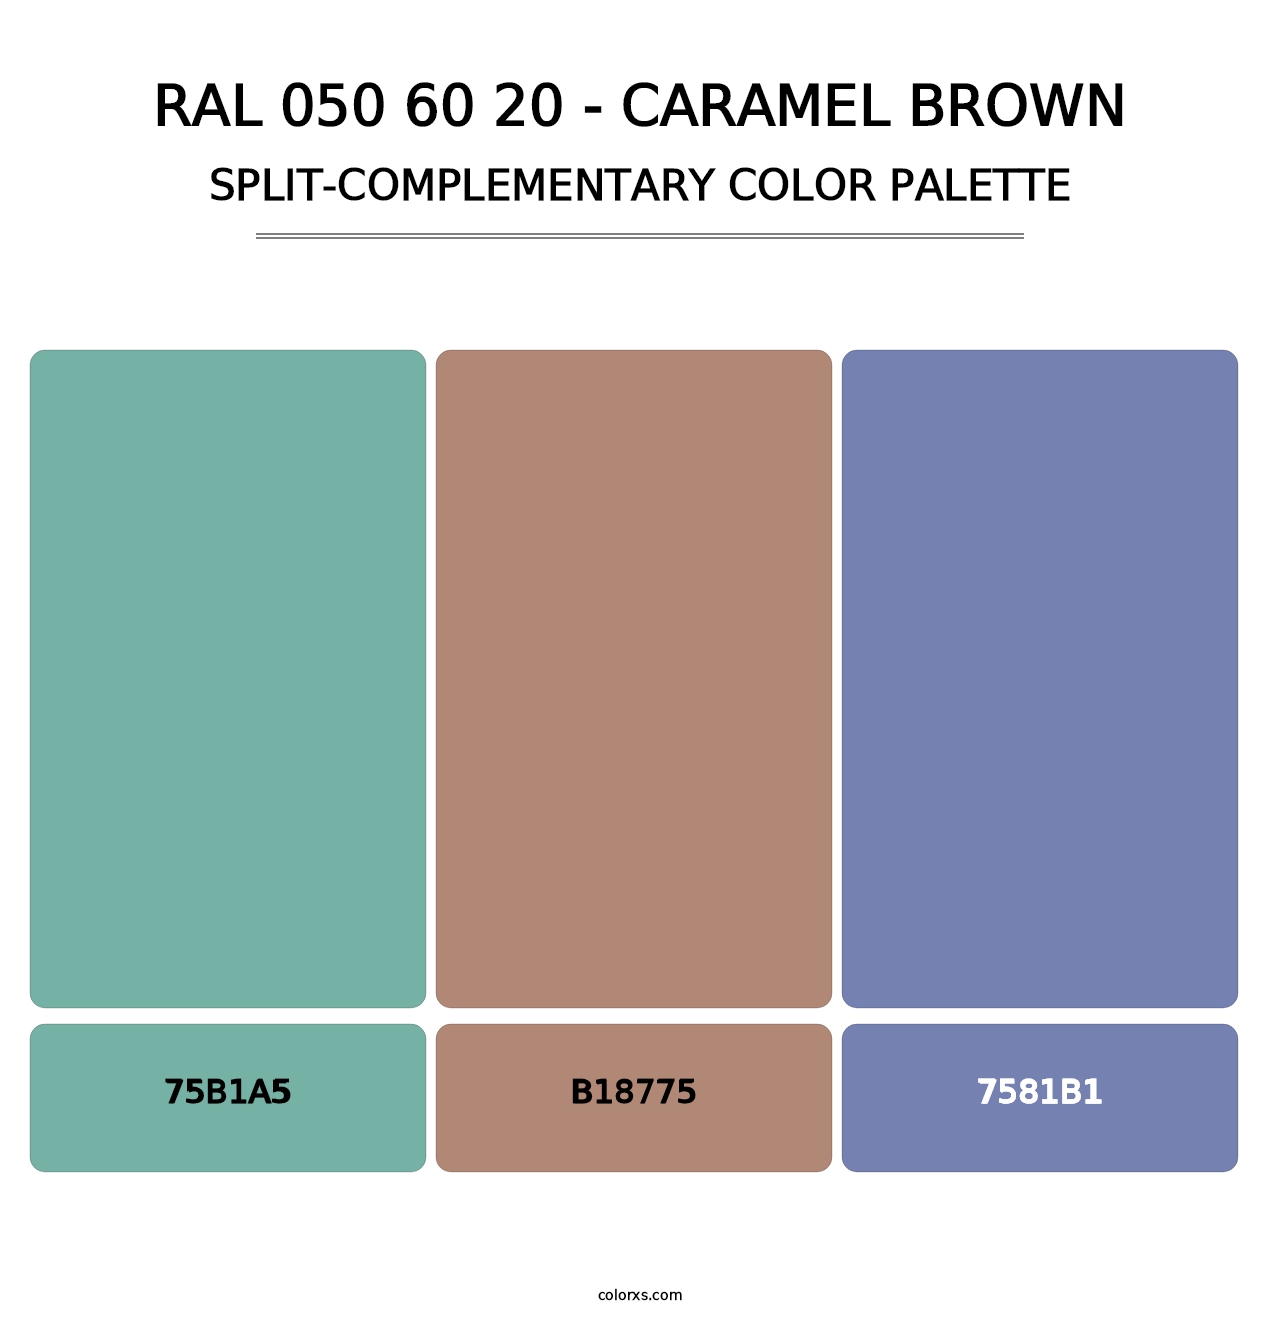 RAL 050 60 20 - Caramel Brown - Split-Complementary Color Palette